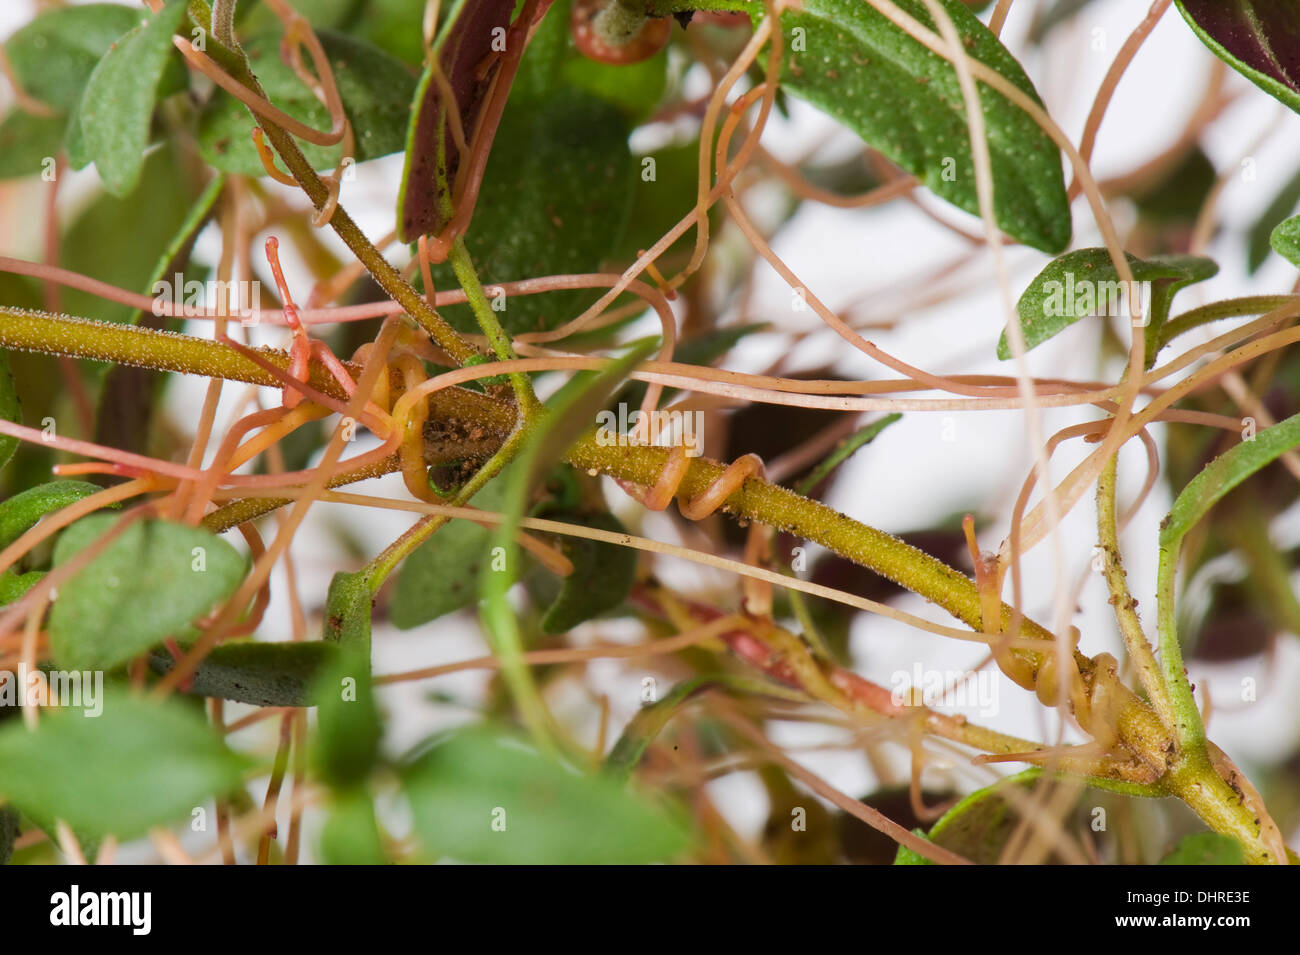 European dodder, Cuscuta europaea, a parasitic plant on a herd thyme plant in a pot Stock Photo